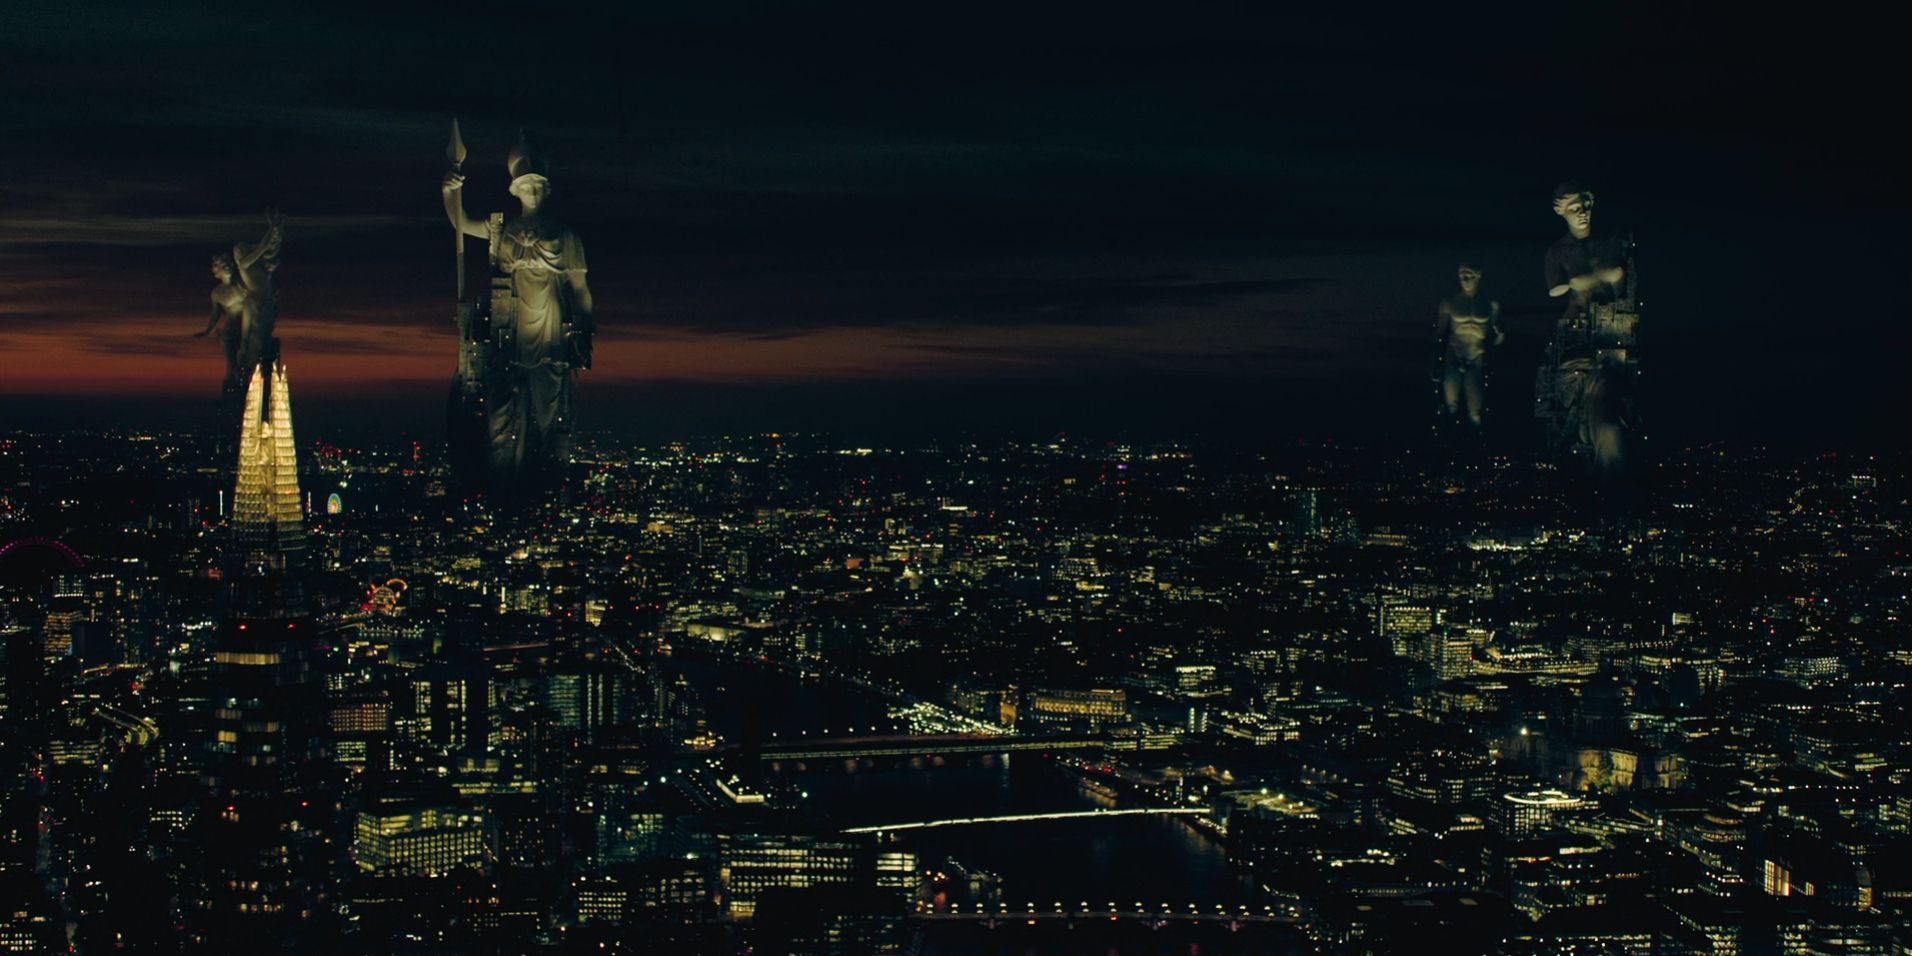 London Skyline 2090s Night in The Peripheral temporada 1 episodio 4